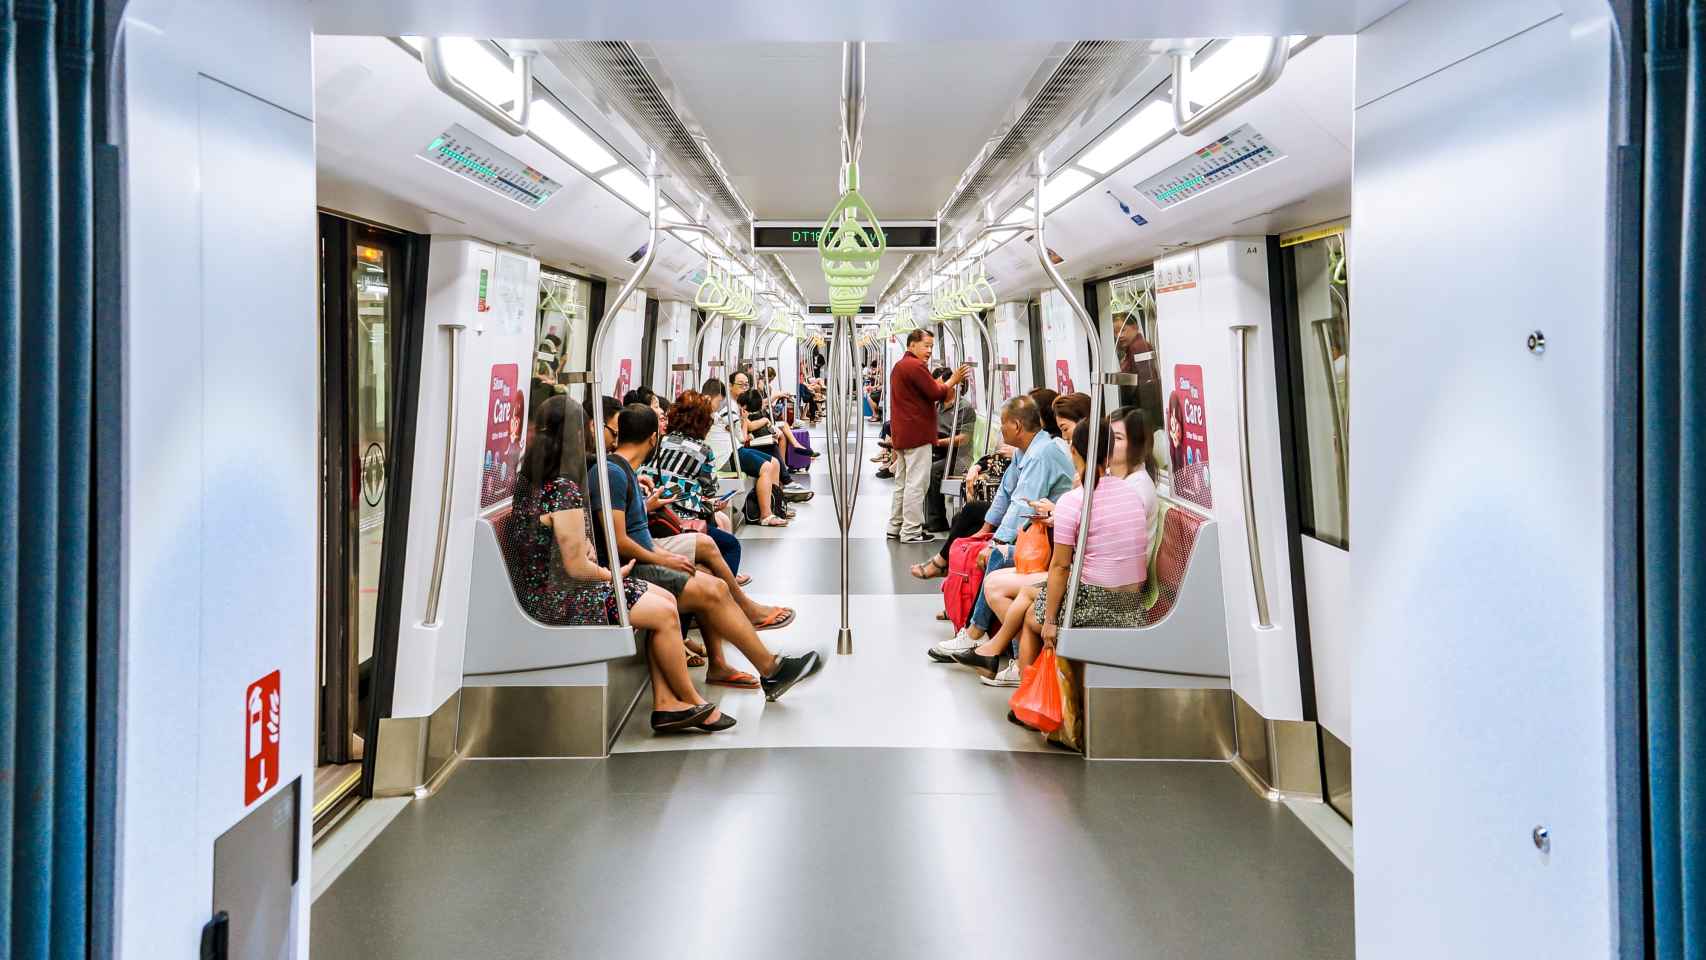 El metro de Singapur. Foto: Euan Cameron / Unsplash.